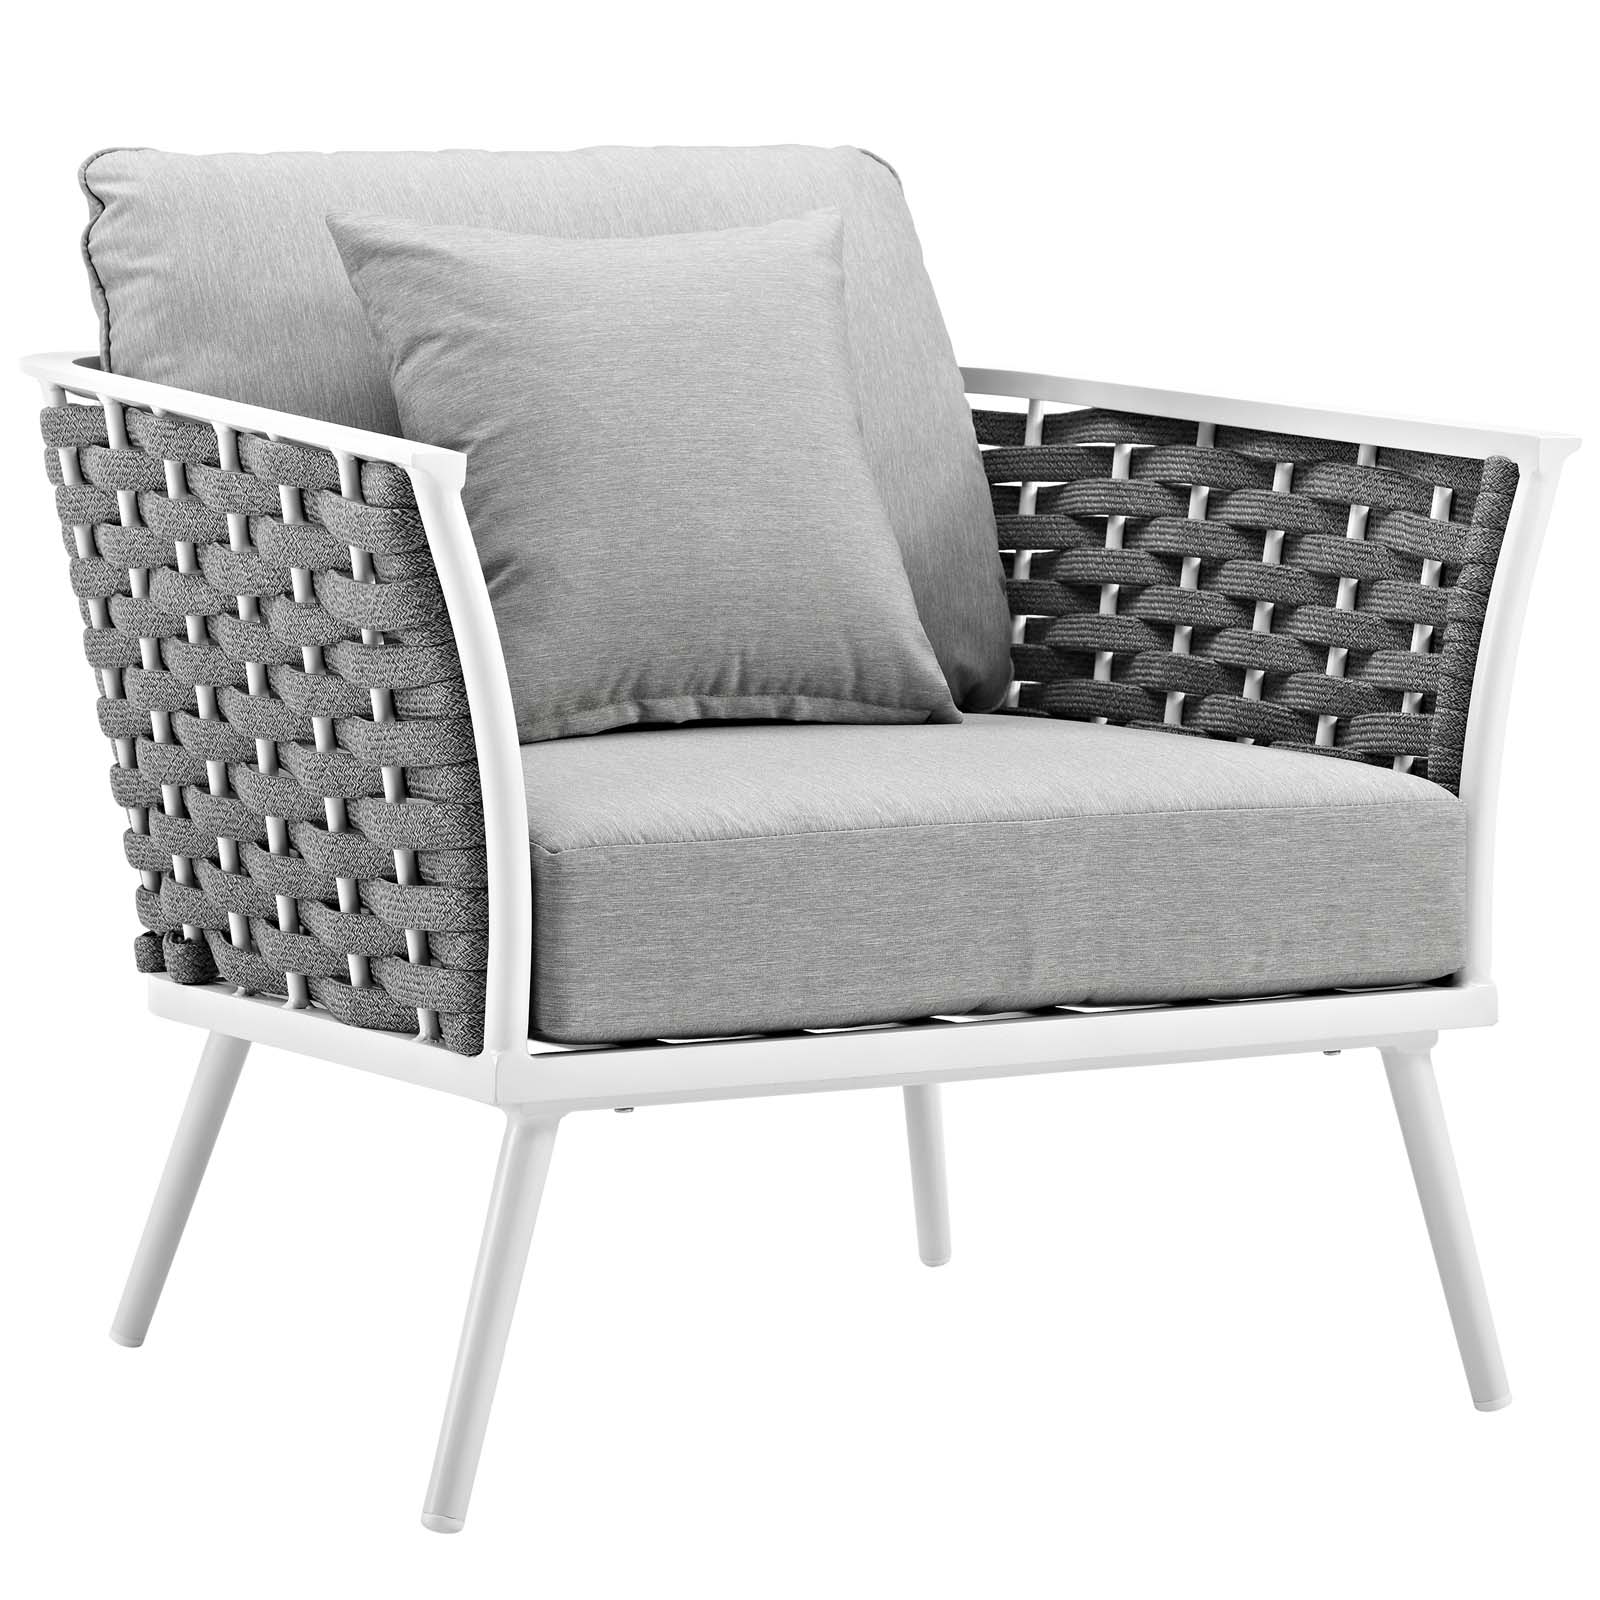 Modern Contemporary Urban Design Outdoor Patio Balcony Garden Furniture Lounge Chair Armchair, Aluminum Metal Steel, White - image 1 of 4